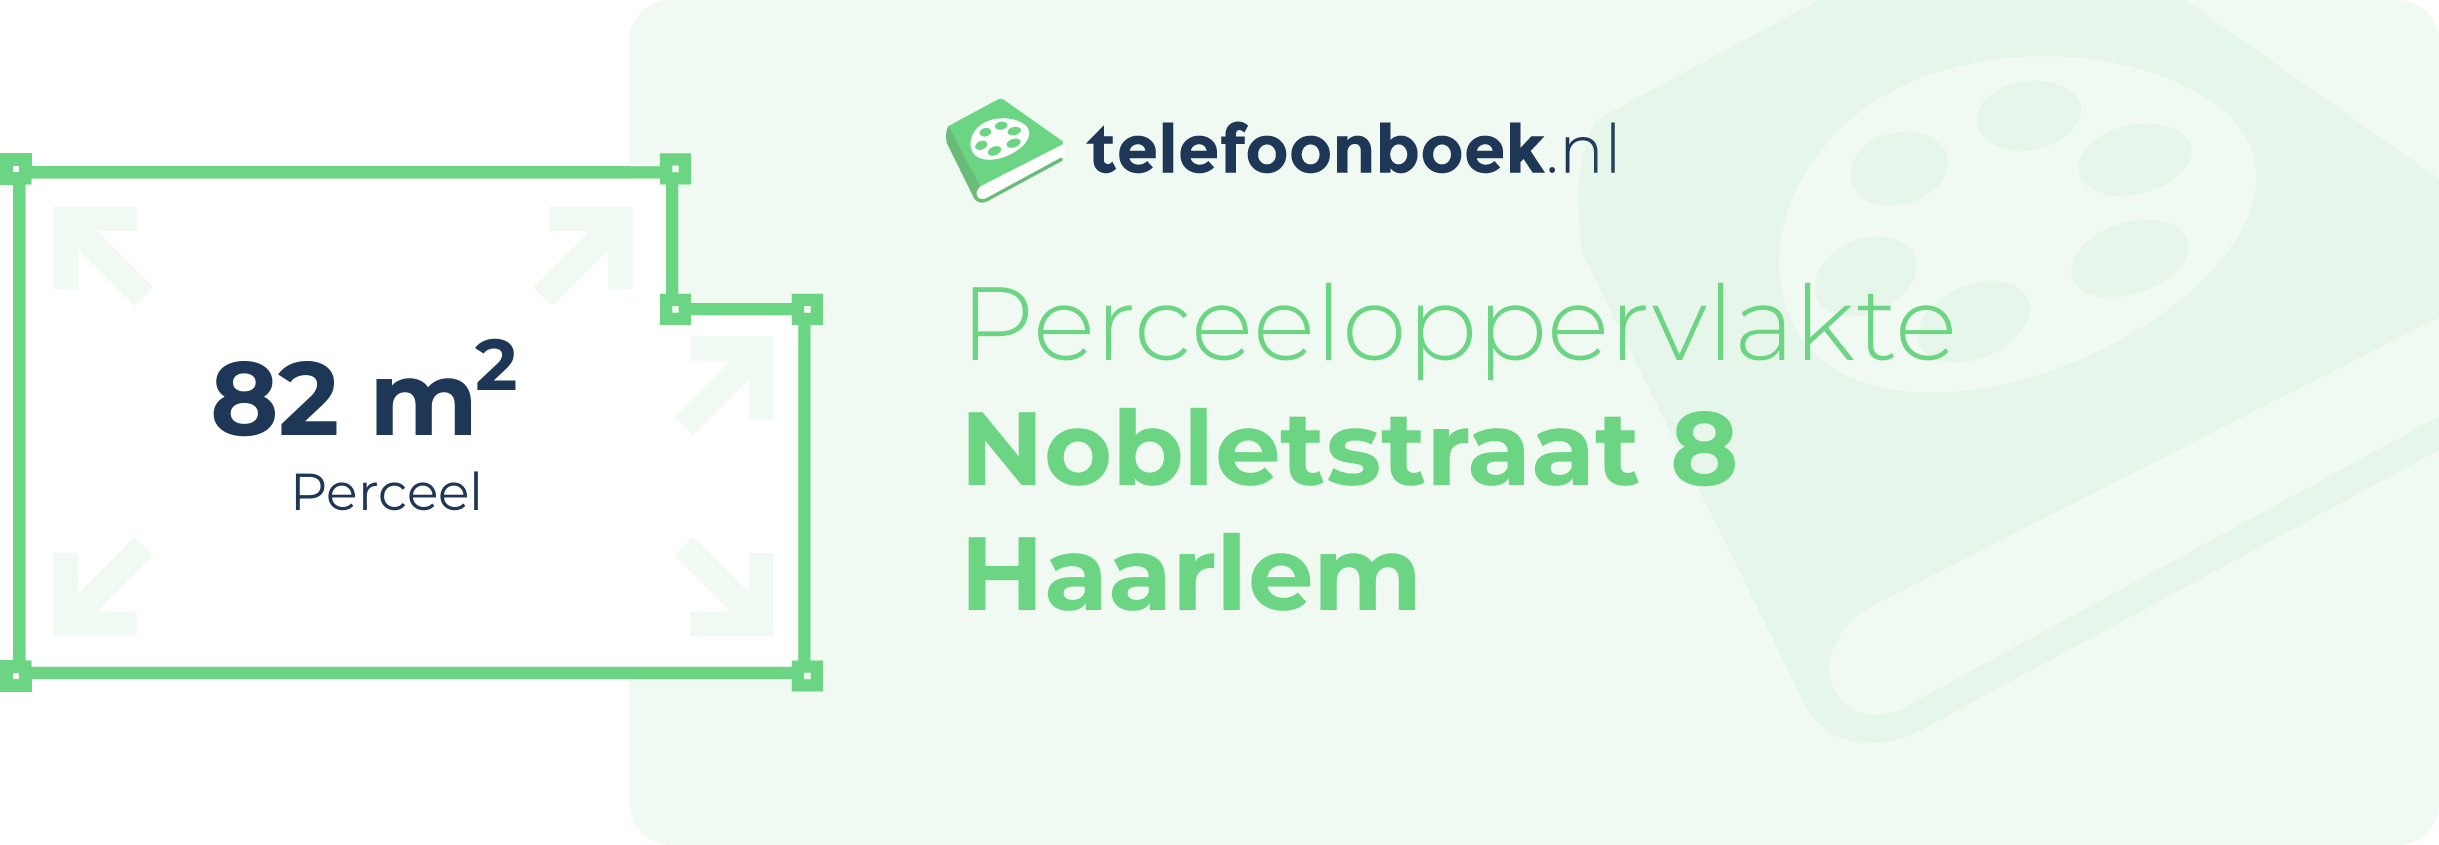 Perceeloppervlakte Nobletstraat 8 Haarlem